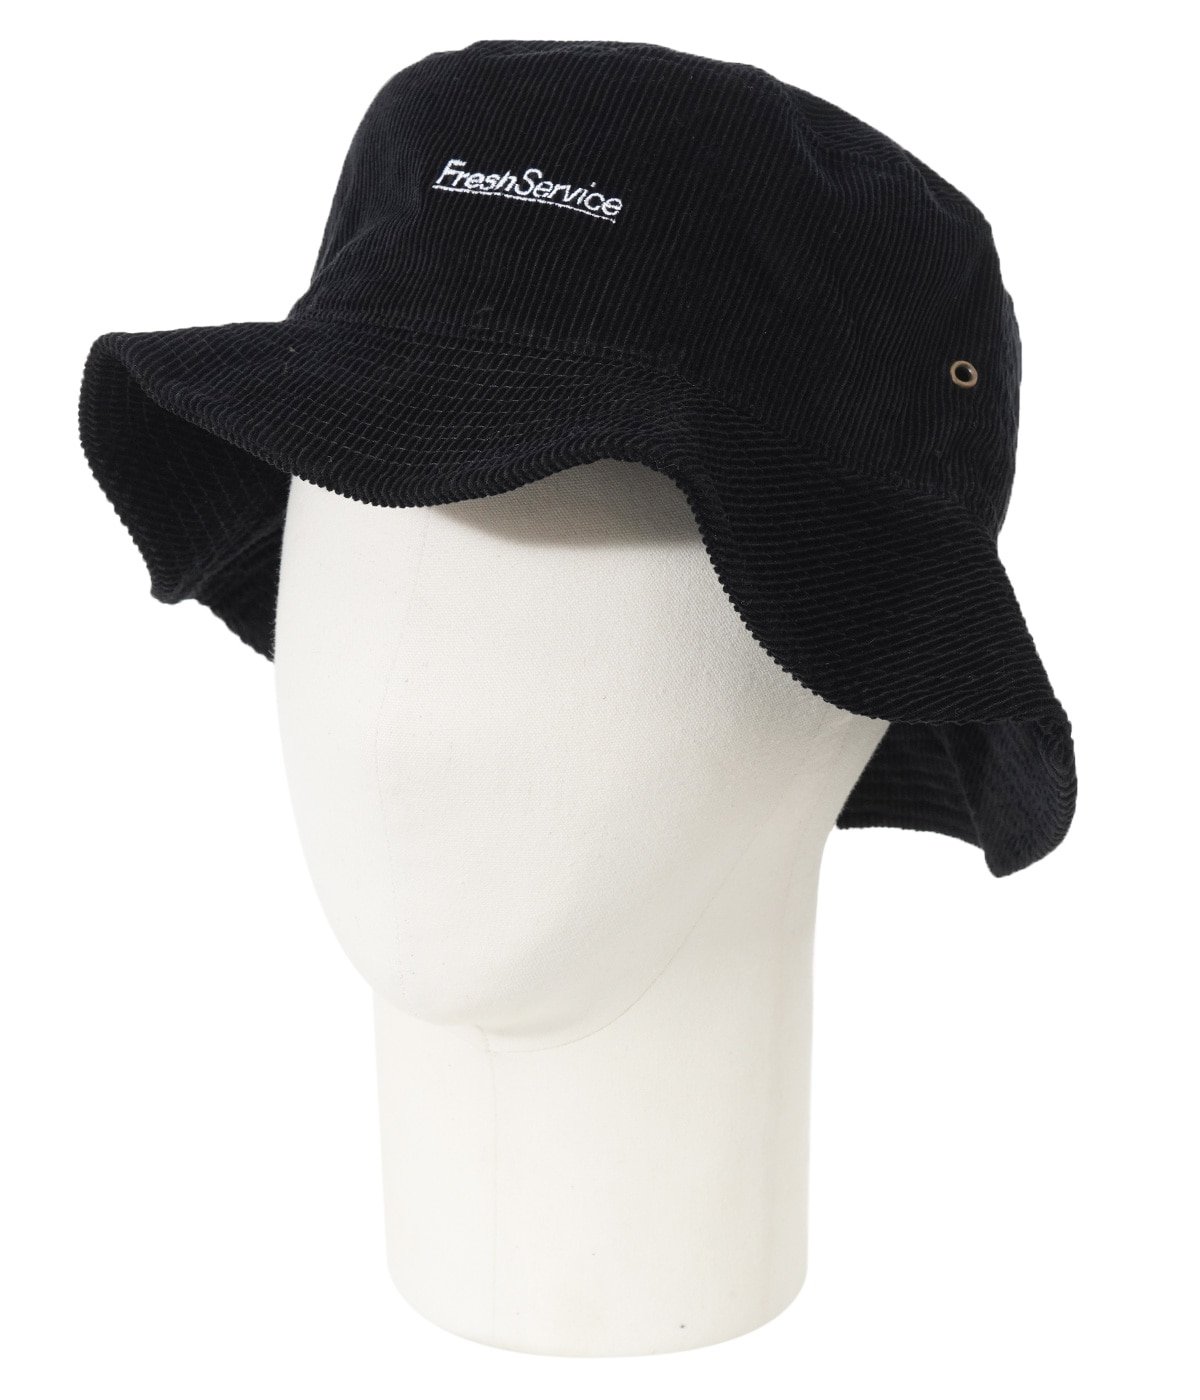 CORPORATE CORDUROY HAT | FreshService(フレッシュサービス) / 帽子 